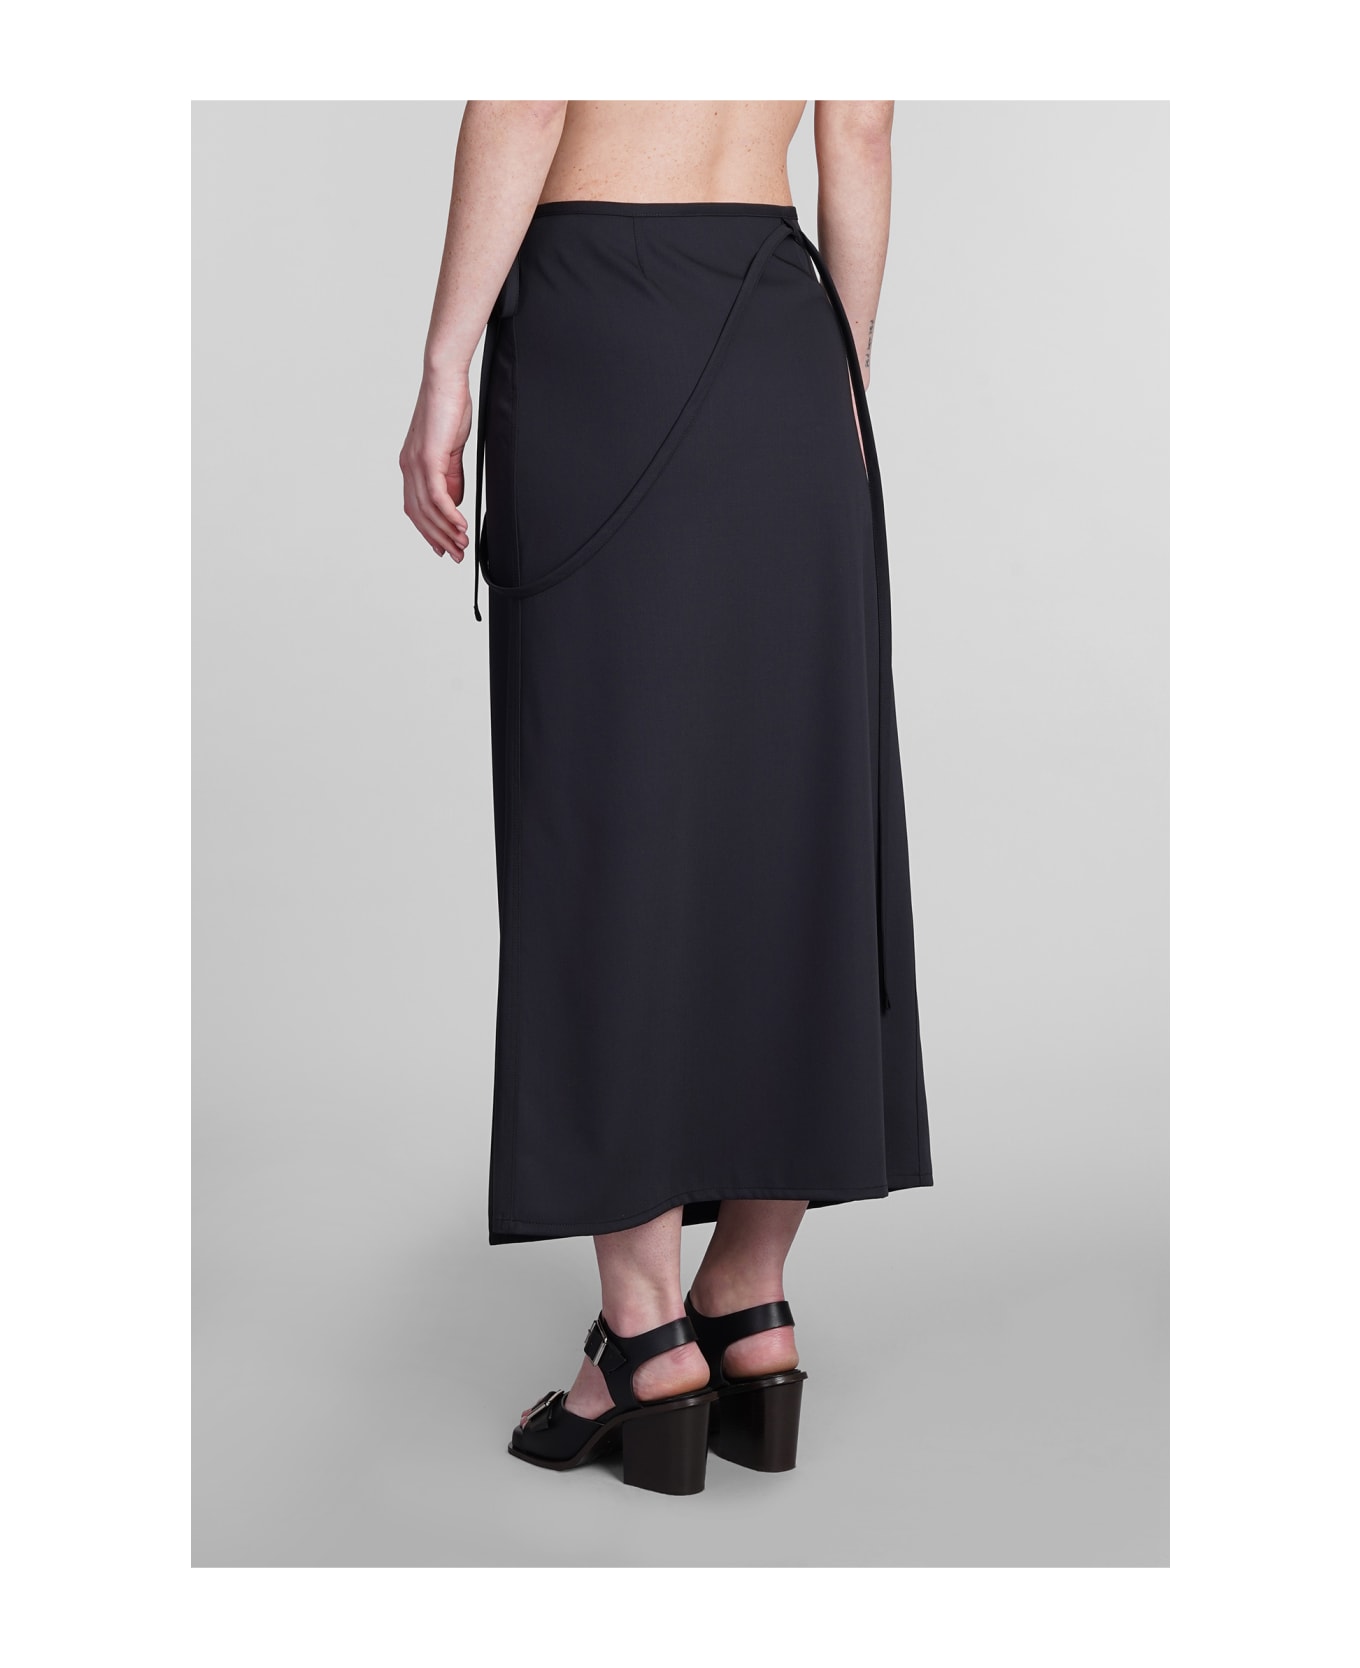 Lemaire Skirt In Black Wool - BLACK